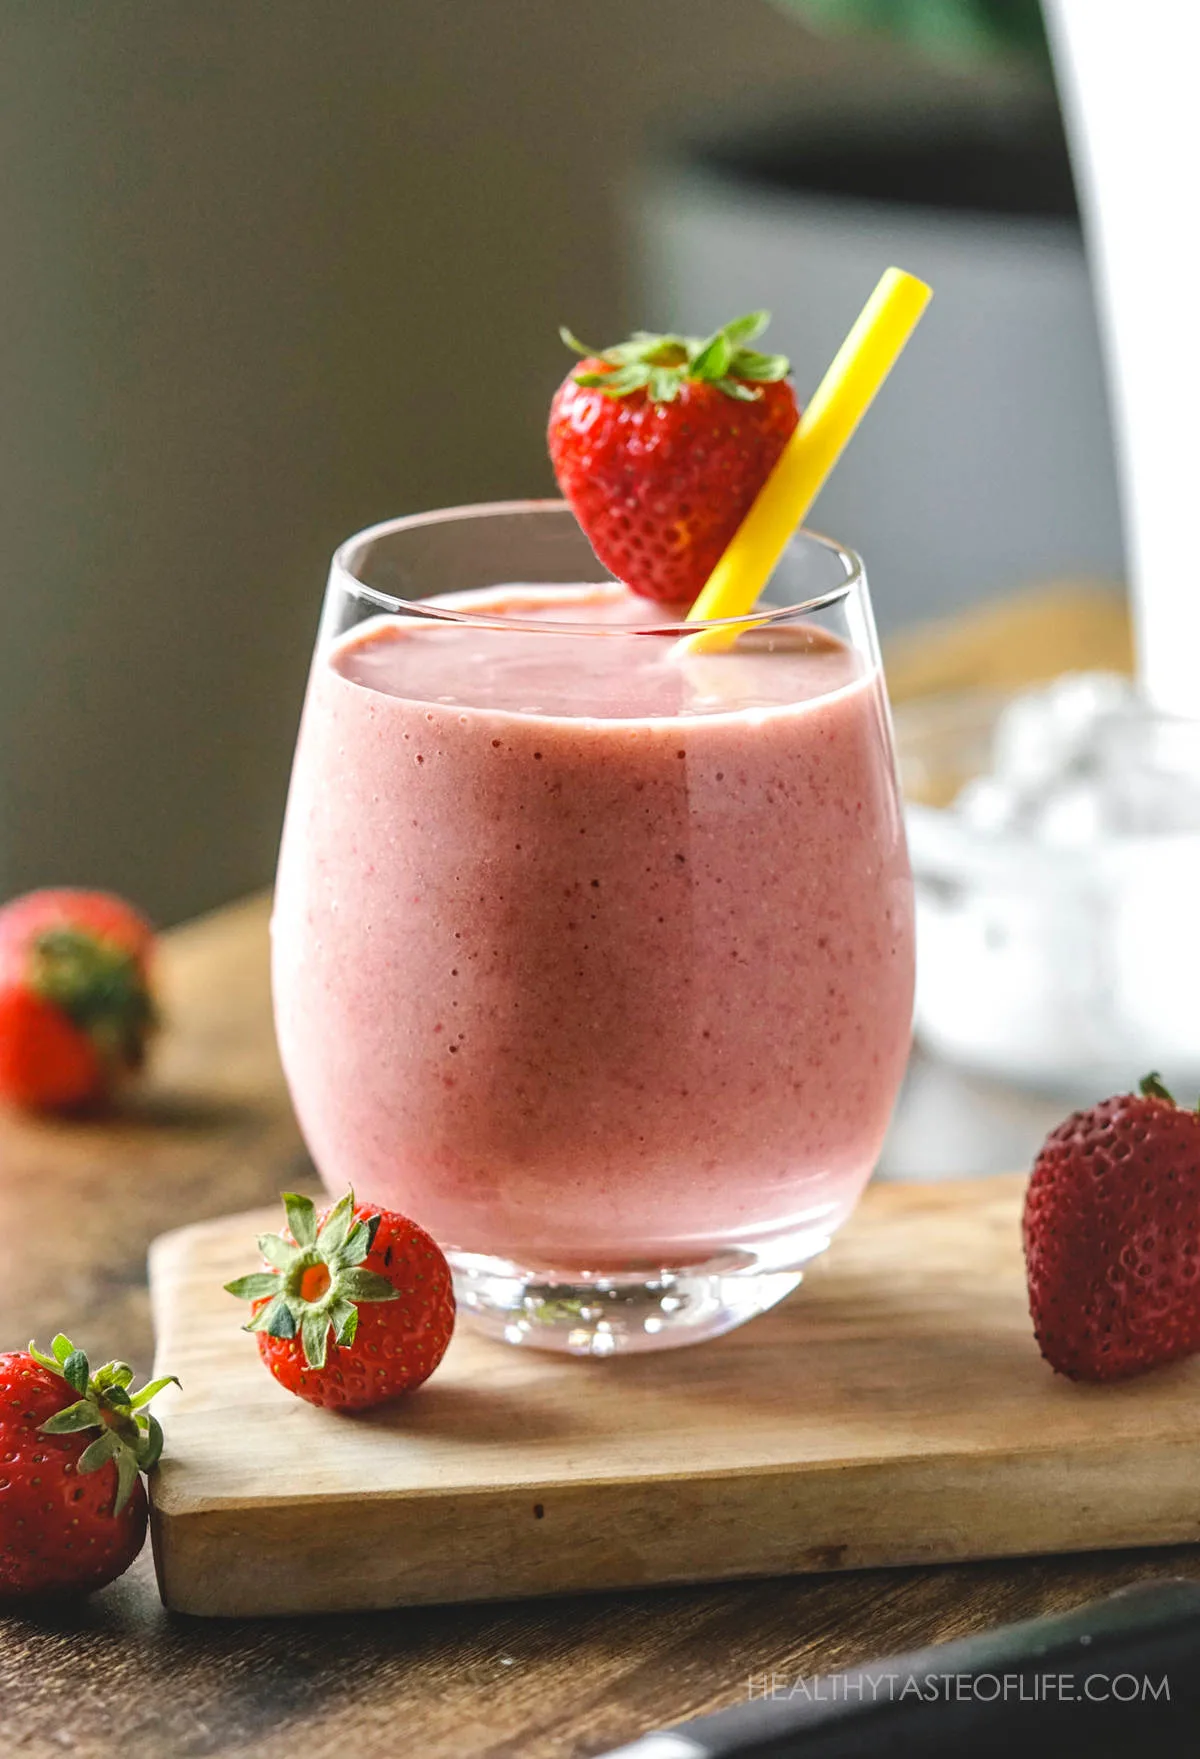 Strawberry banana milkshake in glass garnished with a strawberry.